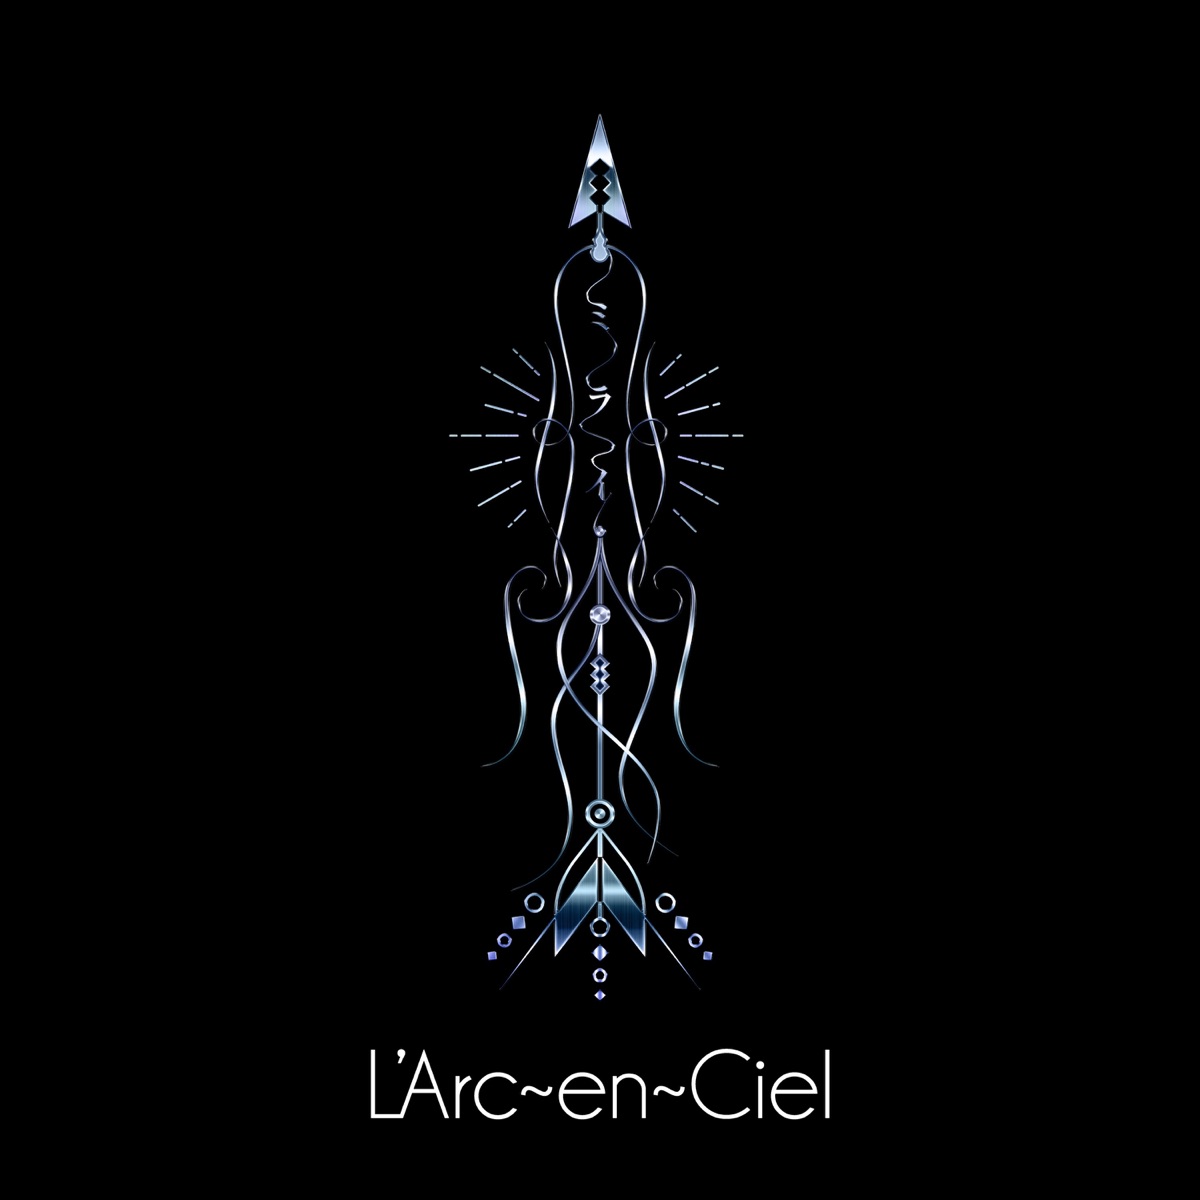 Cover art for『L'Arc〜en〜Ciel - ミライ』from the release『Mirai